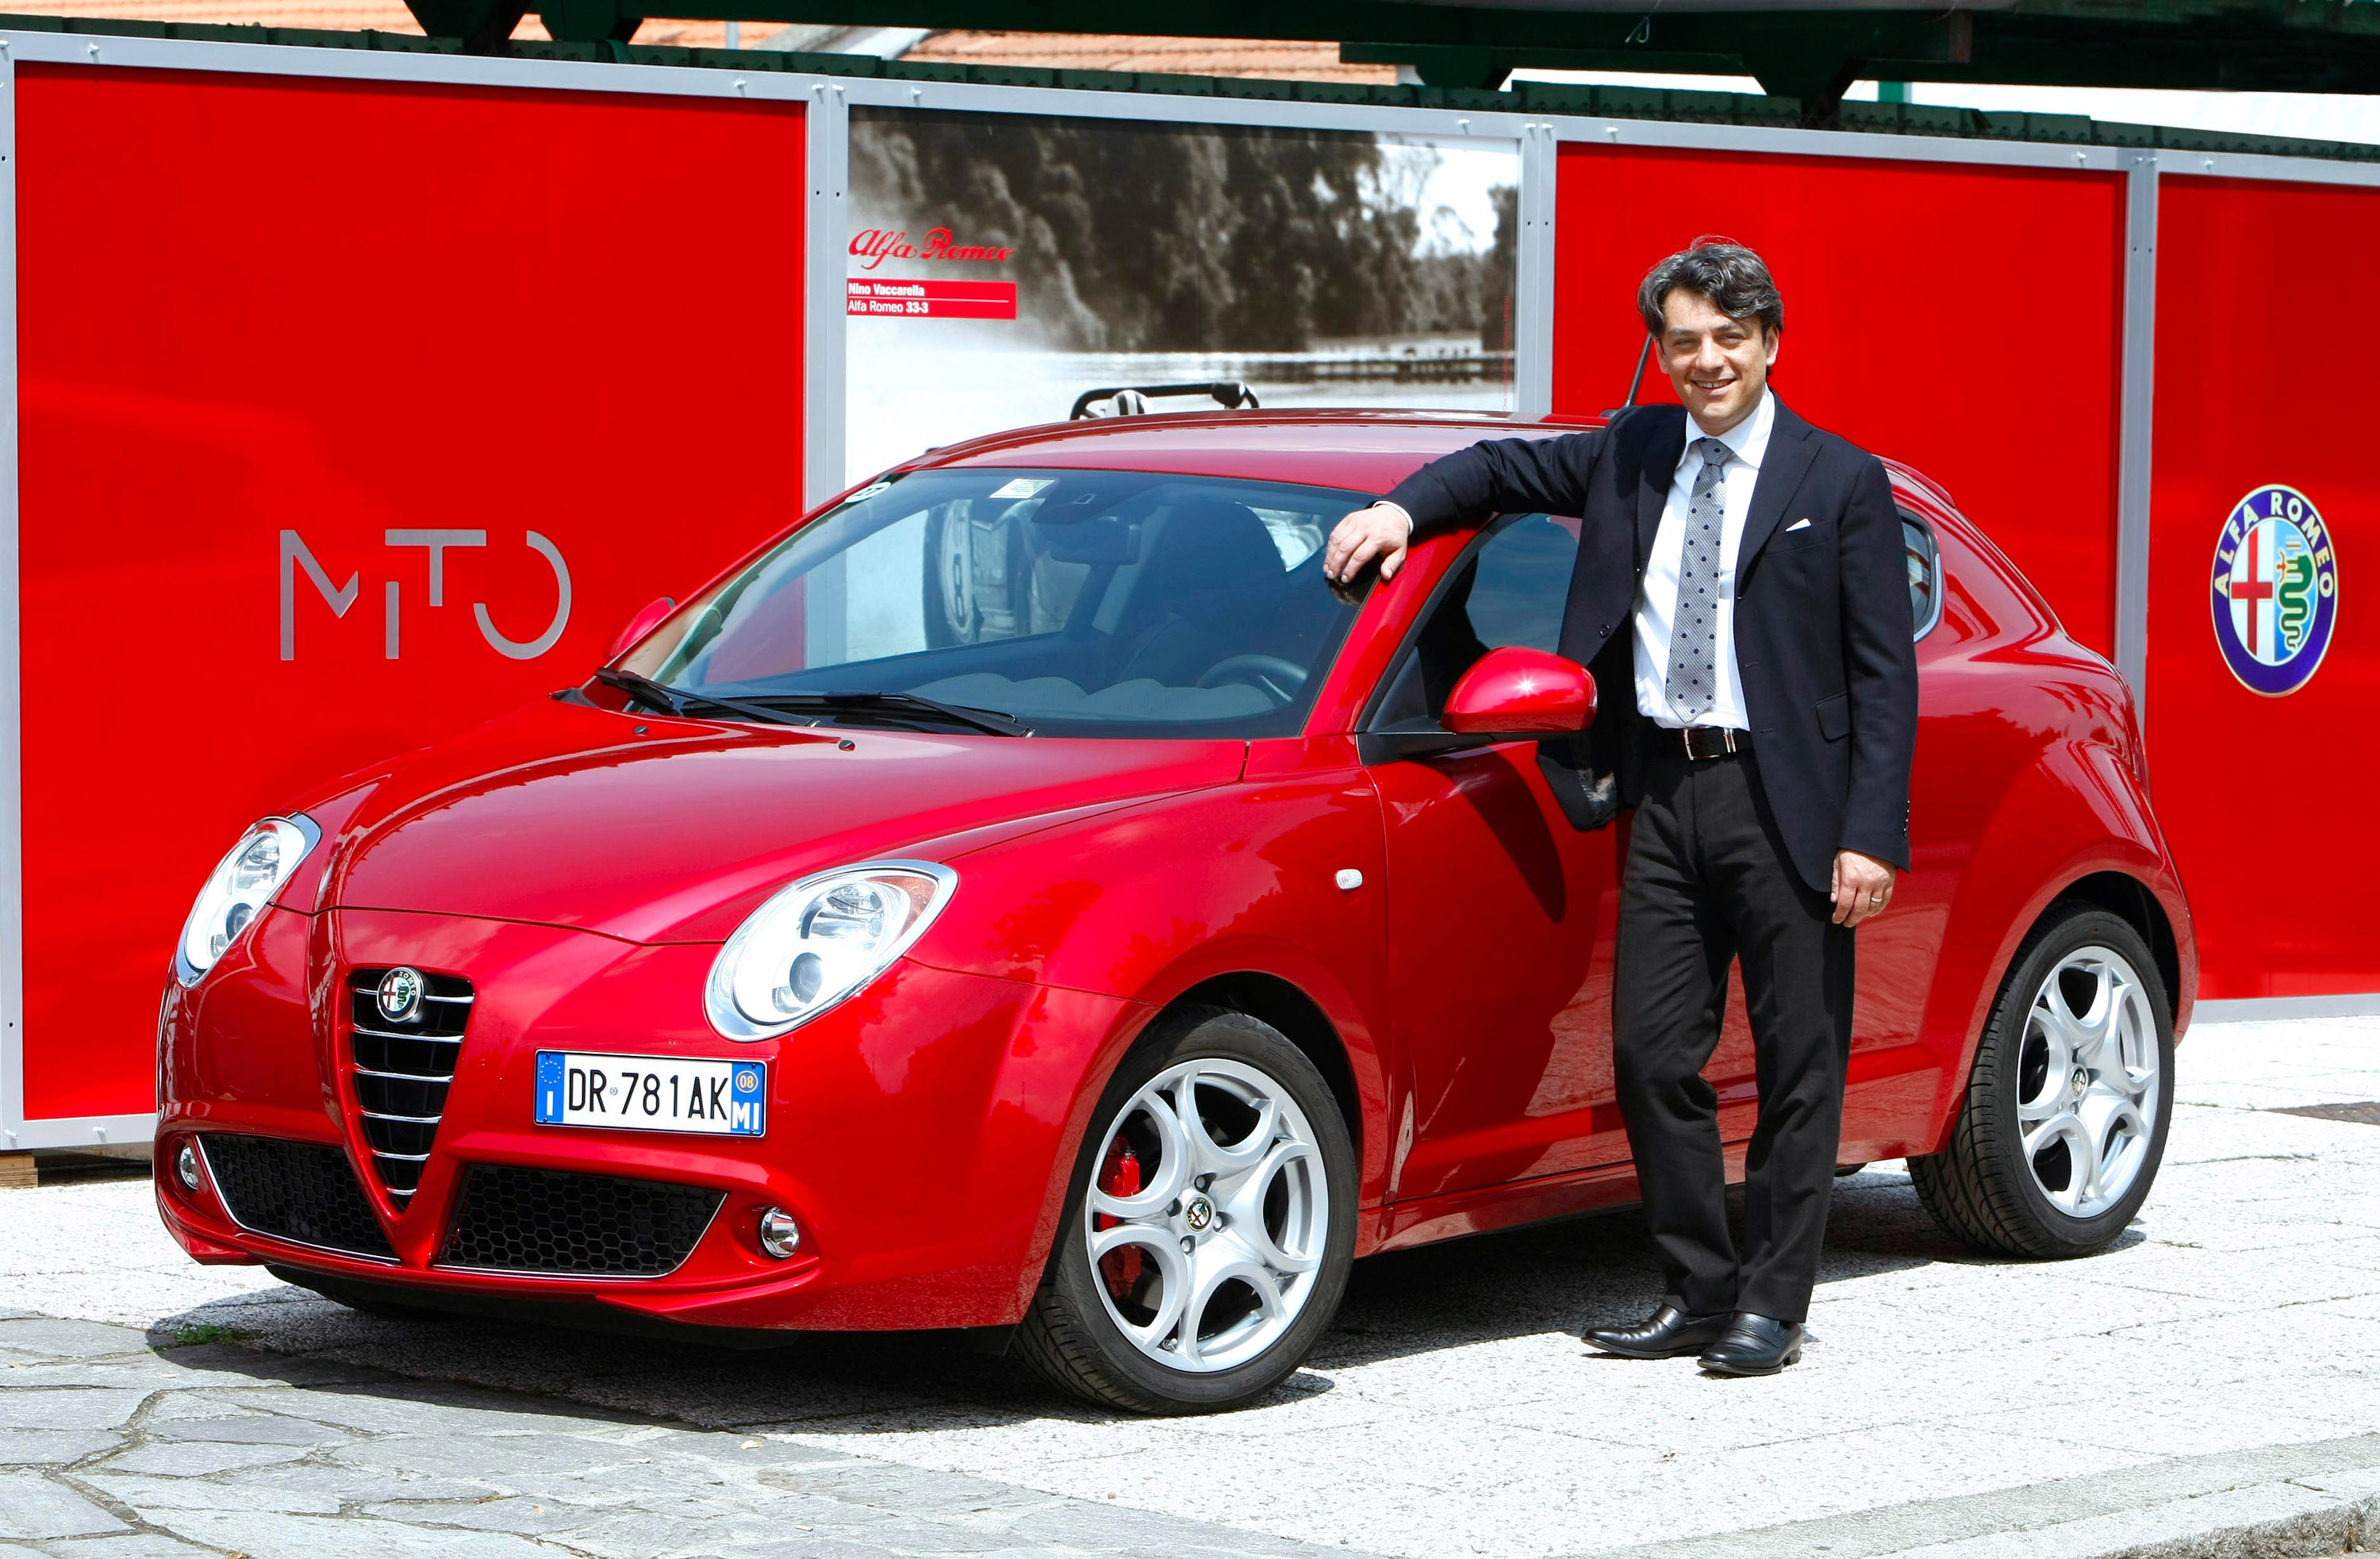 Alfa Romeo MiTo (2008 - ) - AutoManiac